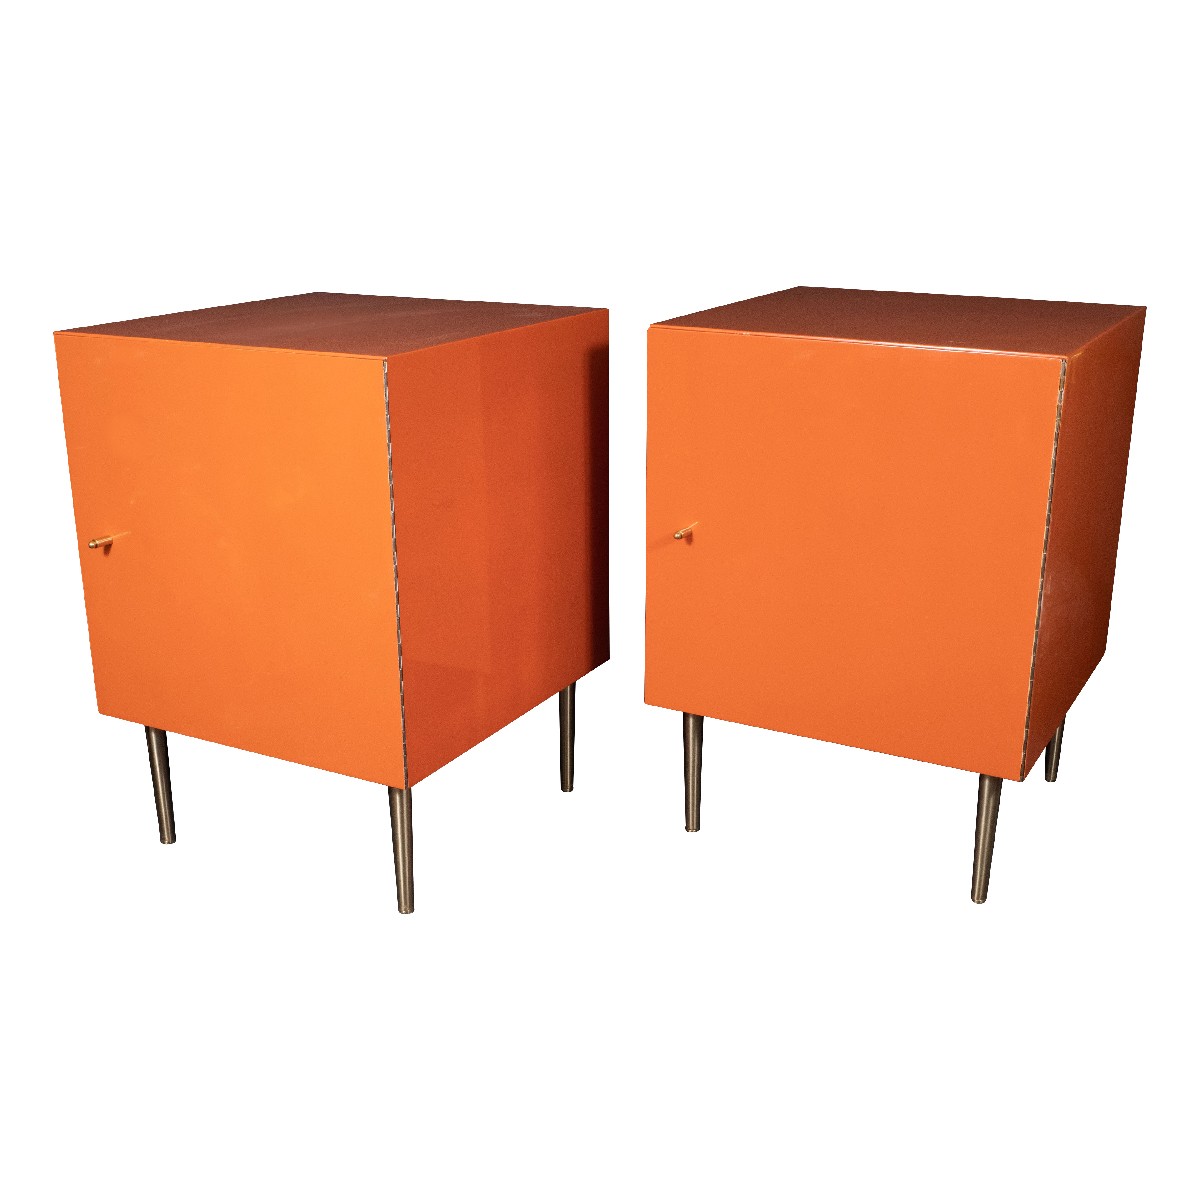 Pair of cubic orange cabinets